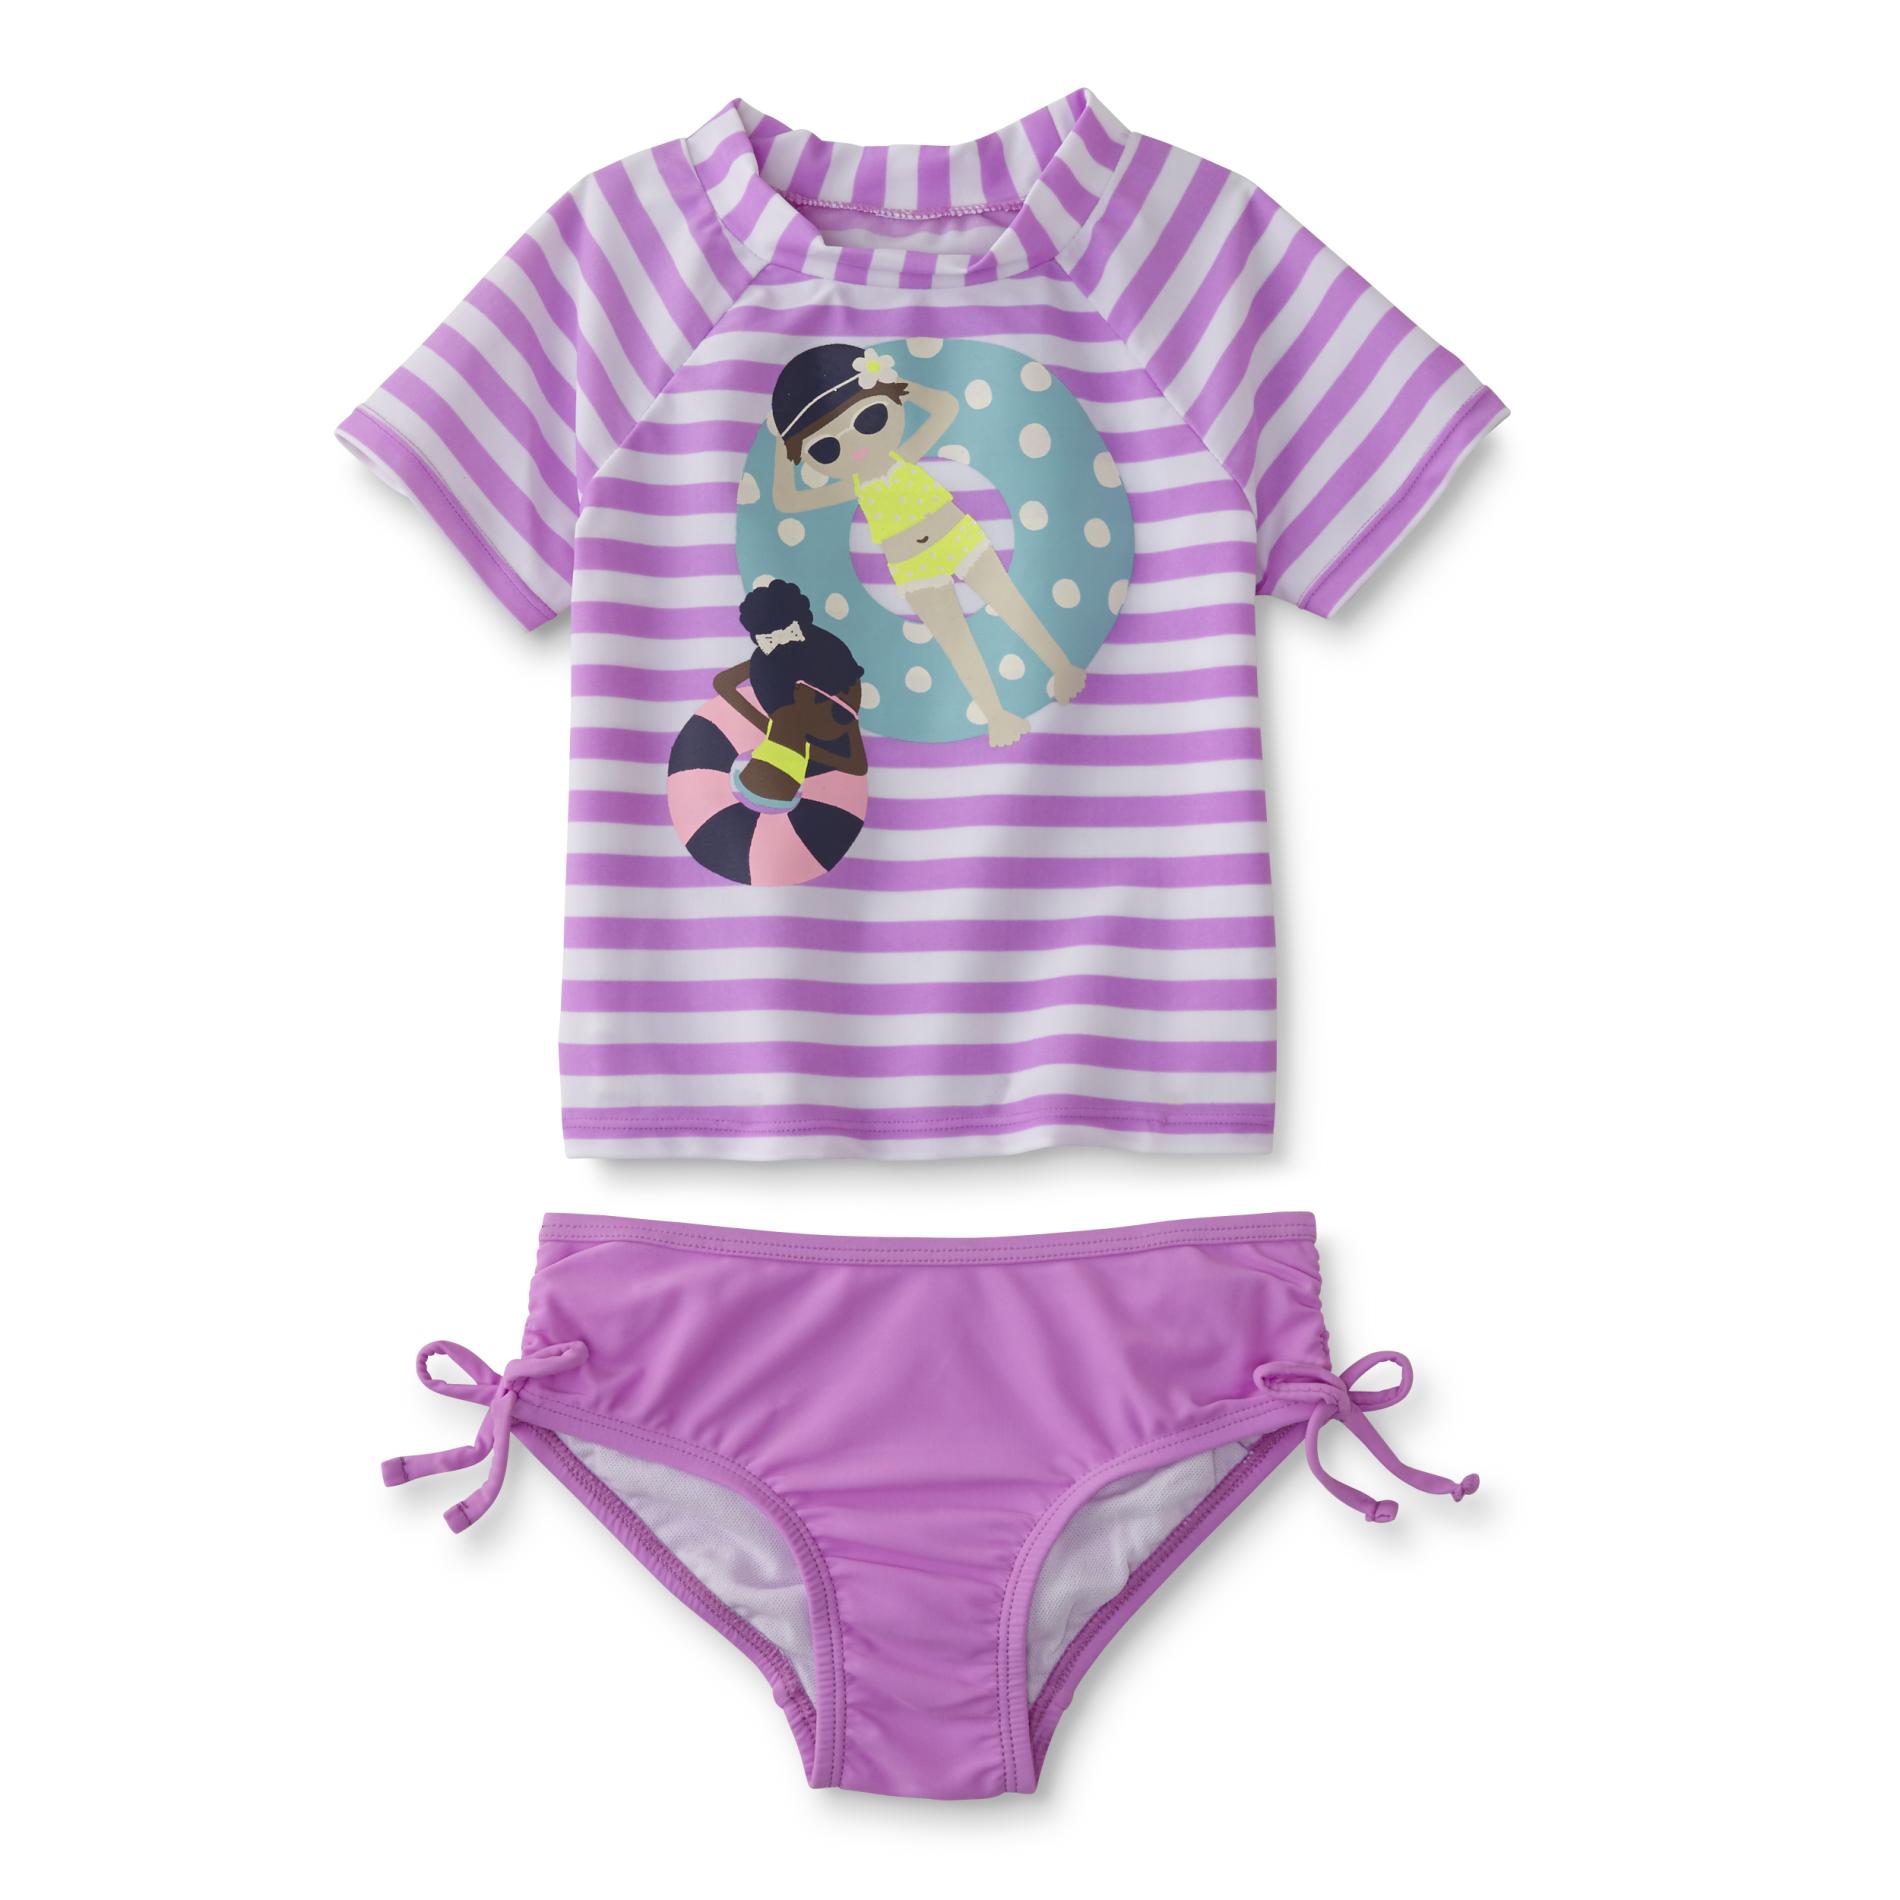 Infant & Toddler Girl's Rashguard Shirt & Swim Bottoms - Striped